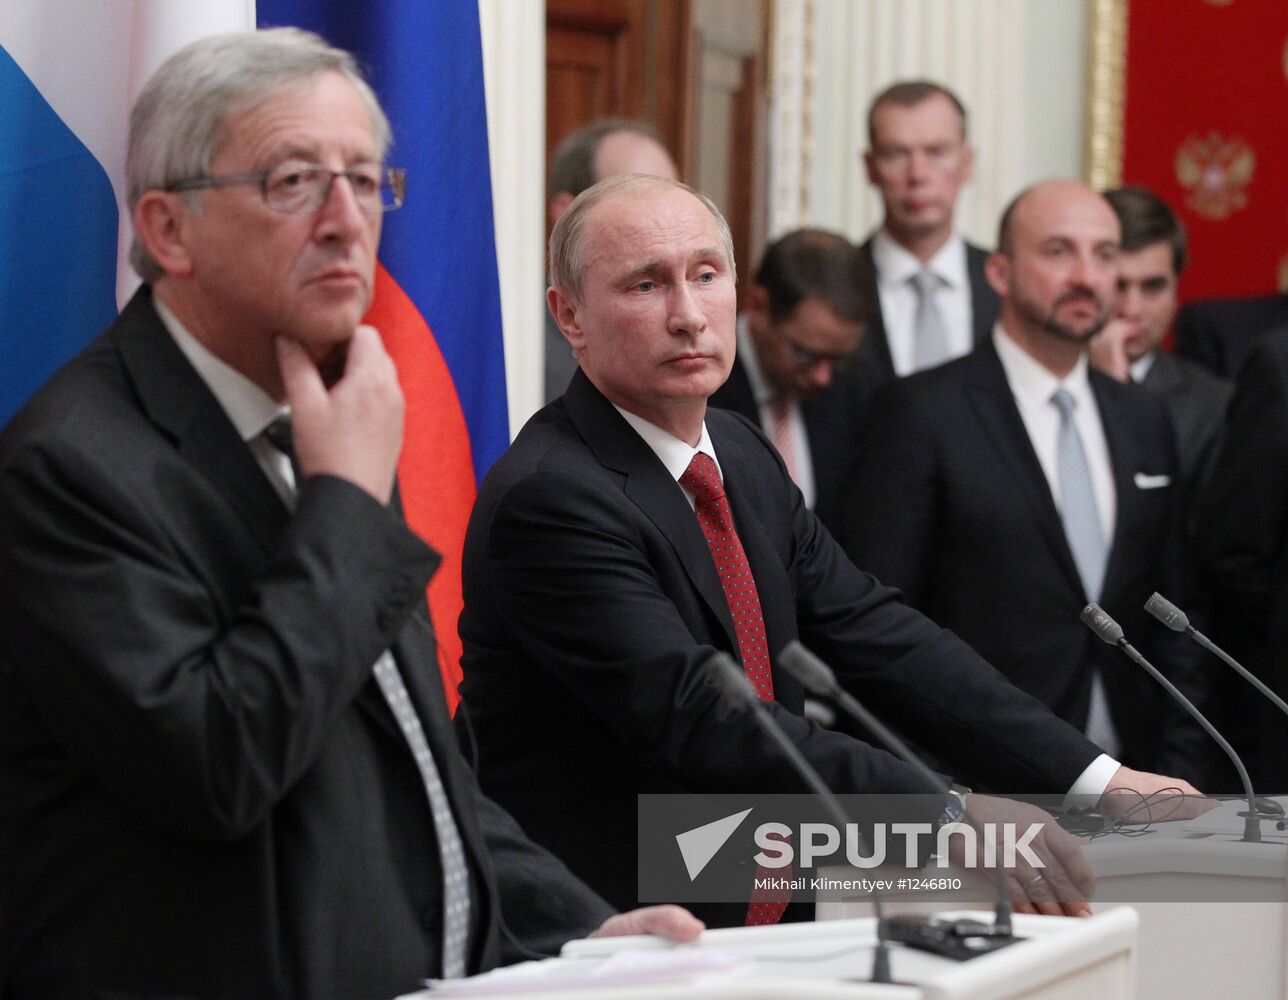 Press conference of Vladimir Putin and Jean-Claude Juncker